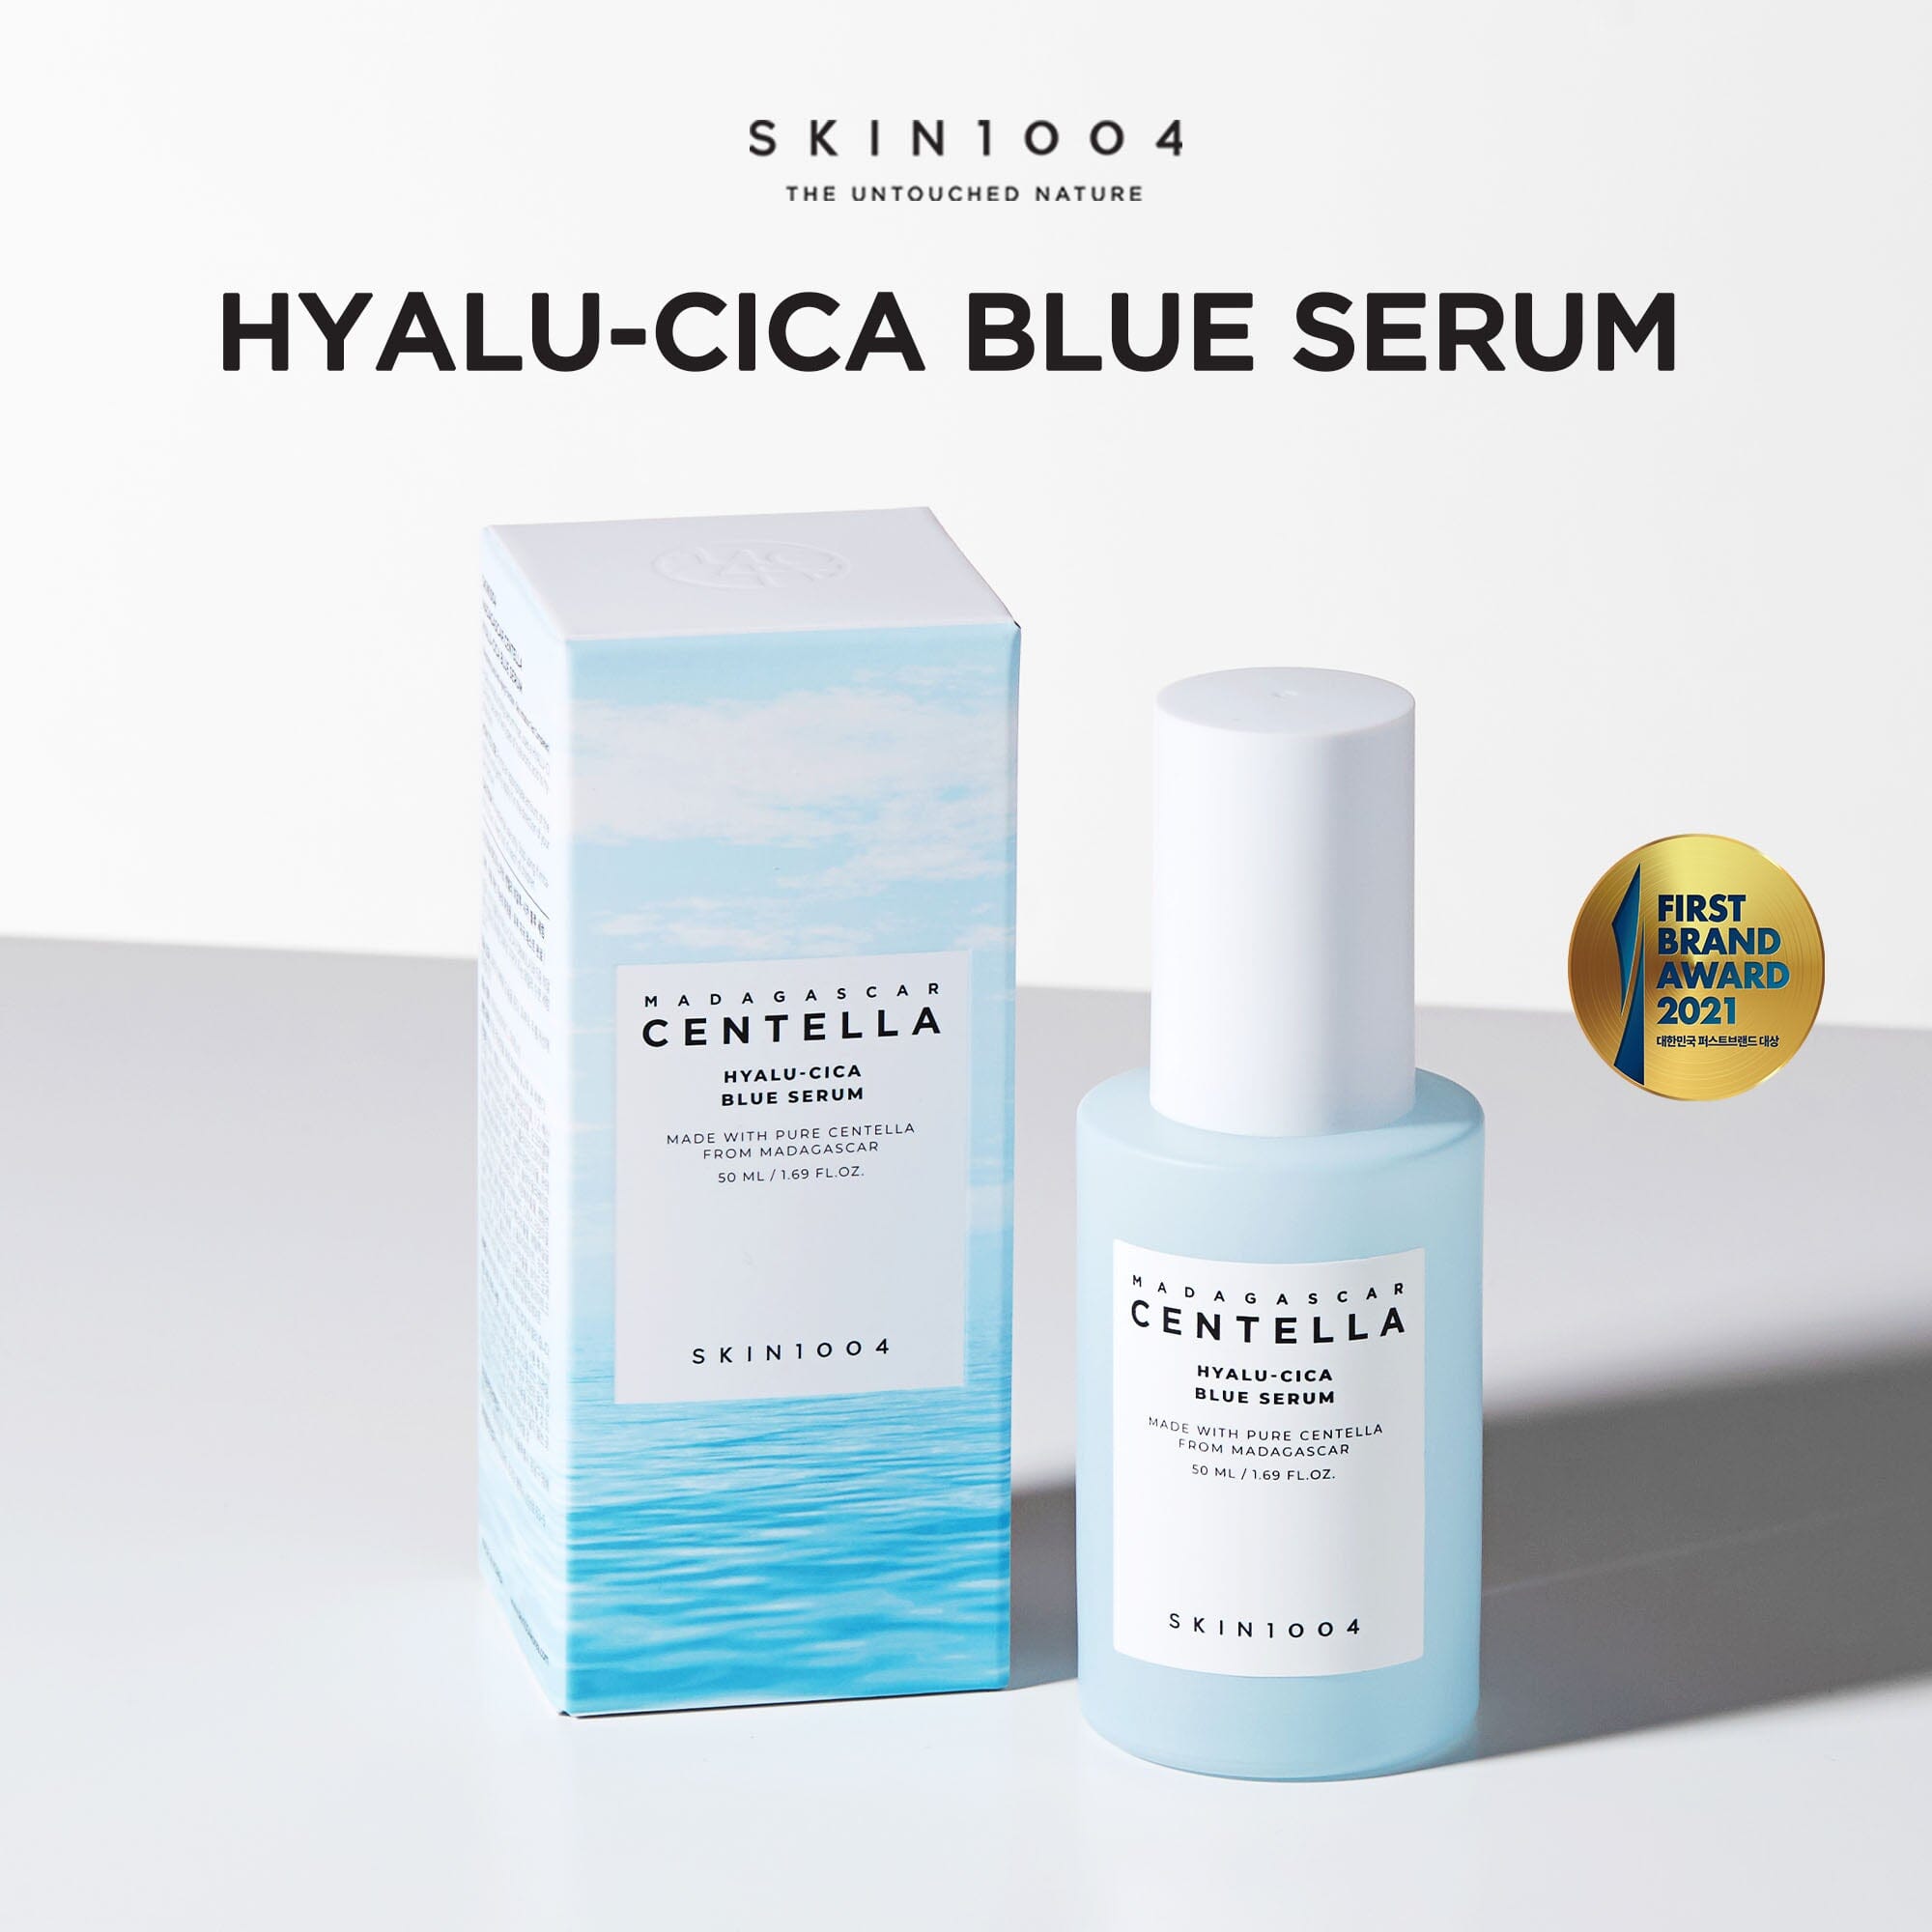 SKIN1004 Madagascar Centella Hyalu-Cica Blue Serum 50ml Skin Care SKIN1004 ORION XO Sri Lanka